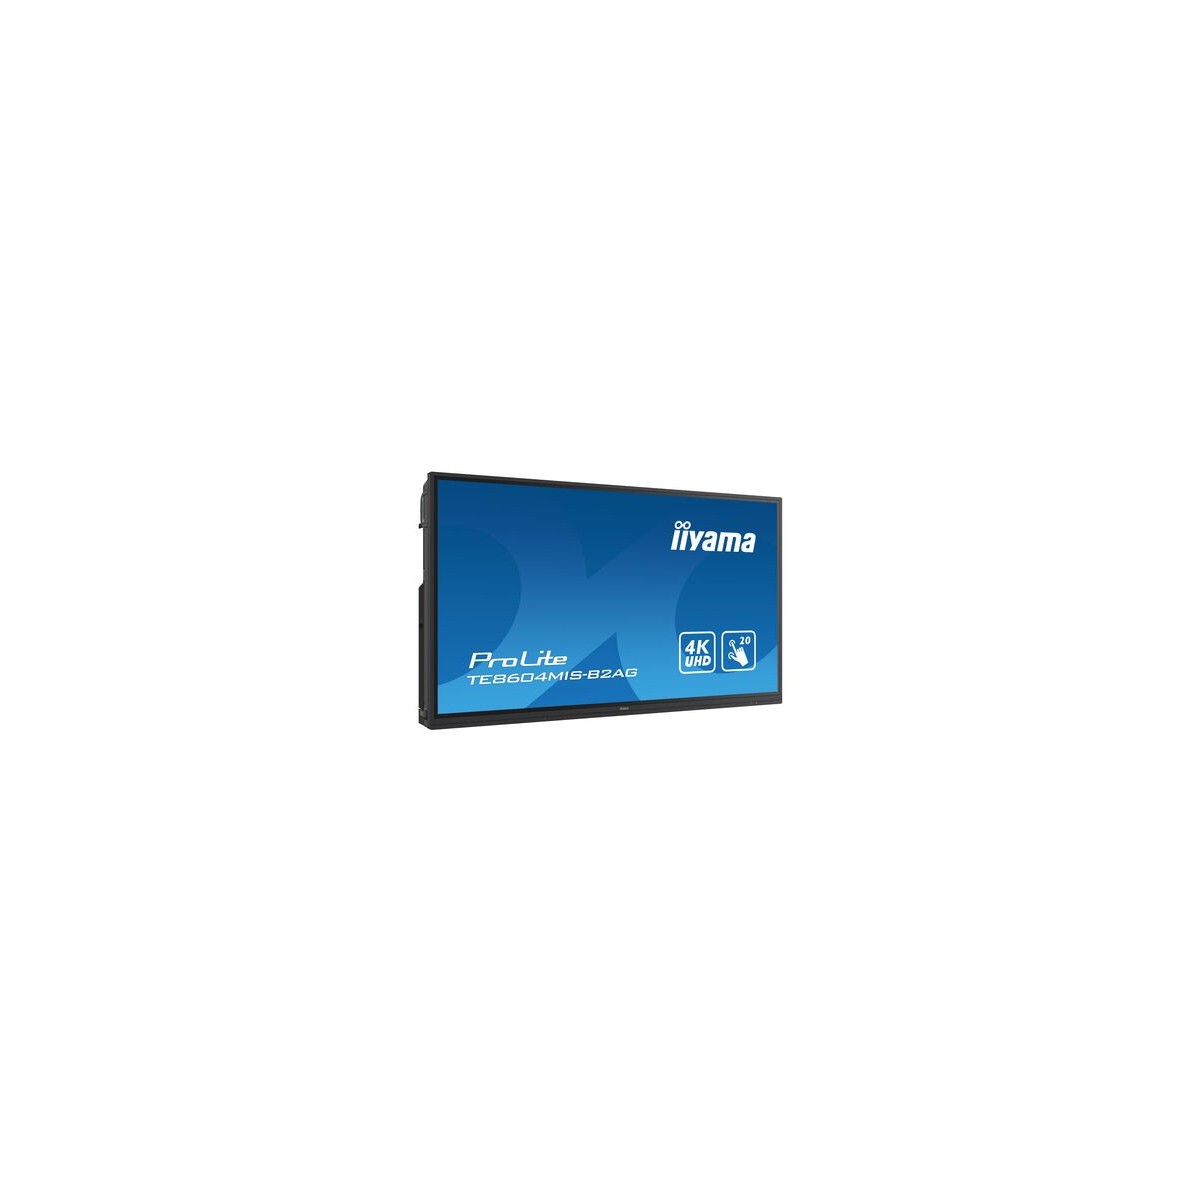 Iiyama 86iWIDE LCD 20-Points PureTouch-IR Screen 3840 x 2160 4K UHD IPS panel - Flat Screen